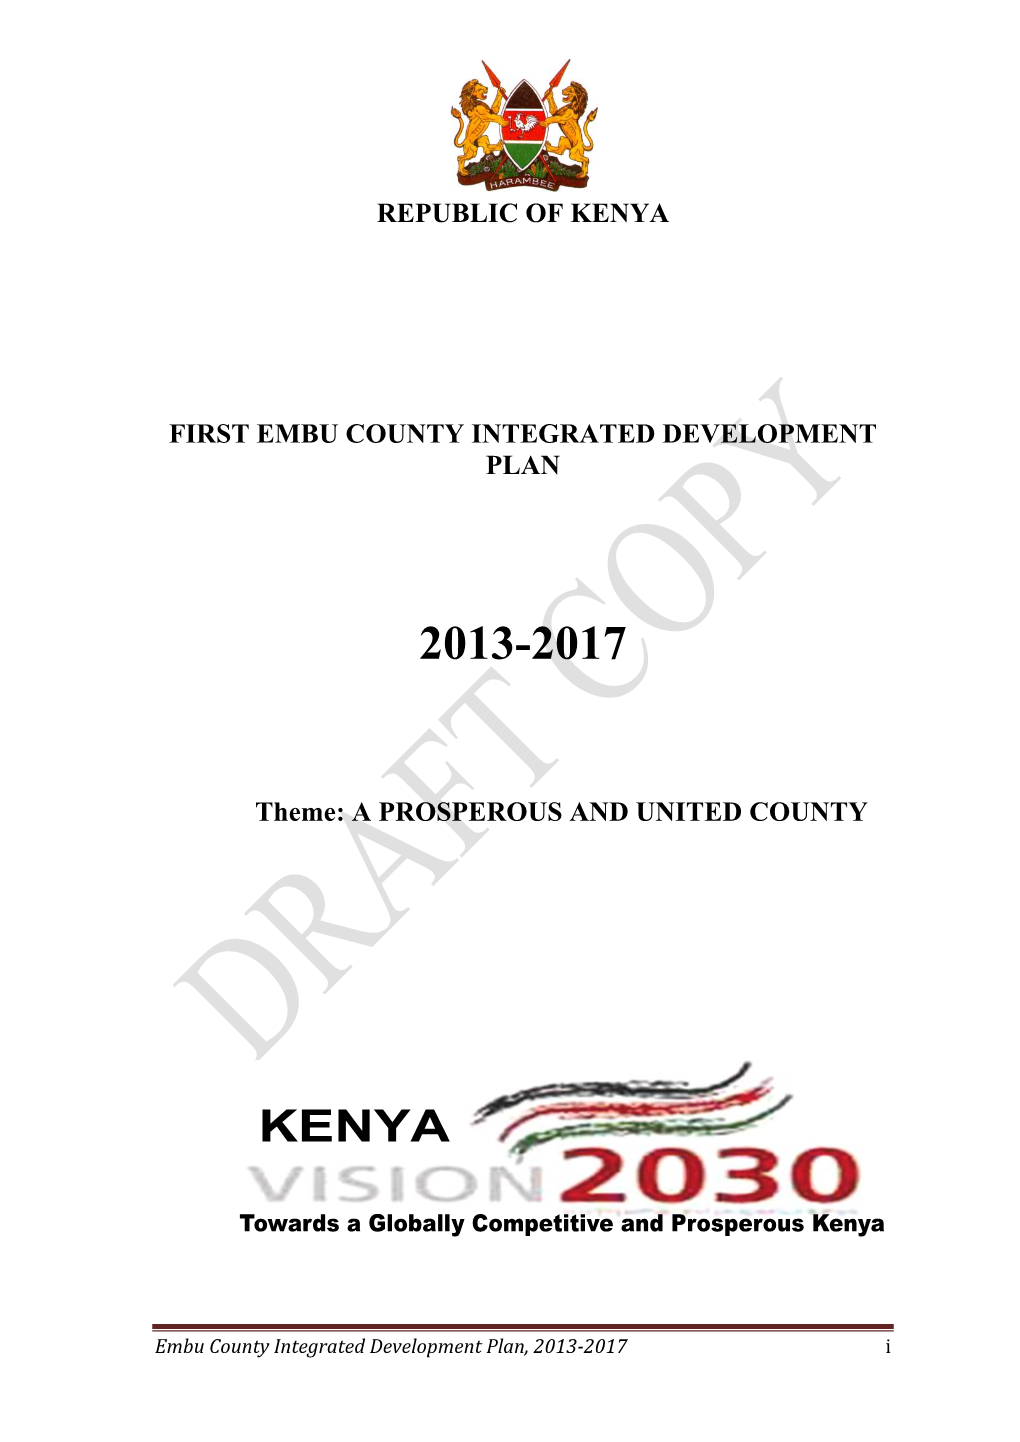 Republic of Kenya First Embu County Integrated Development Plan